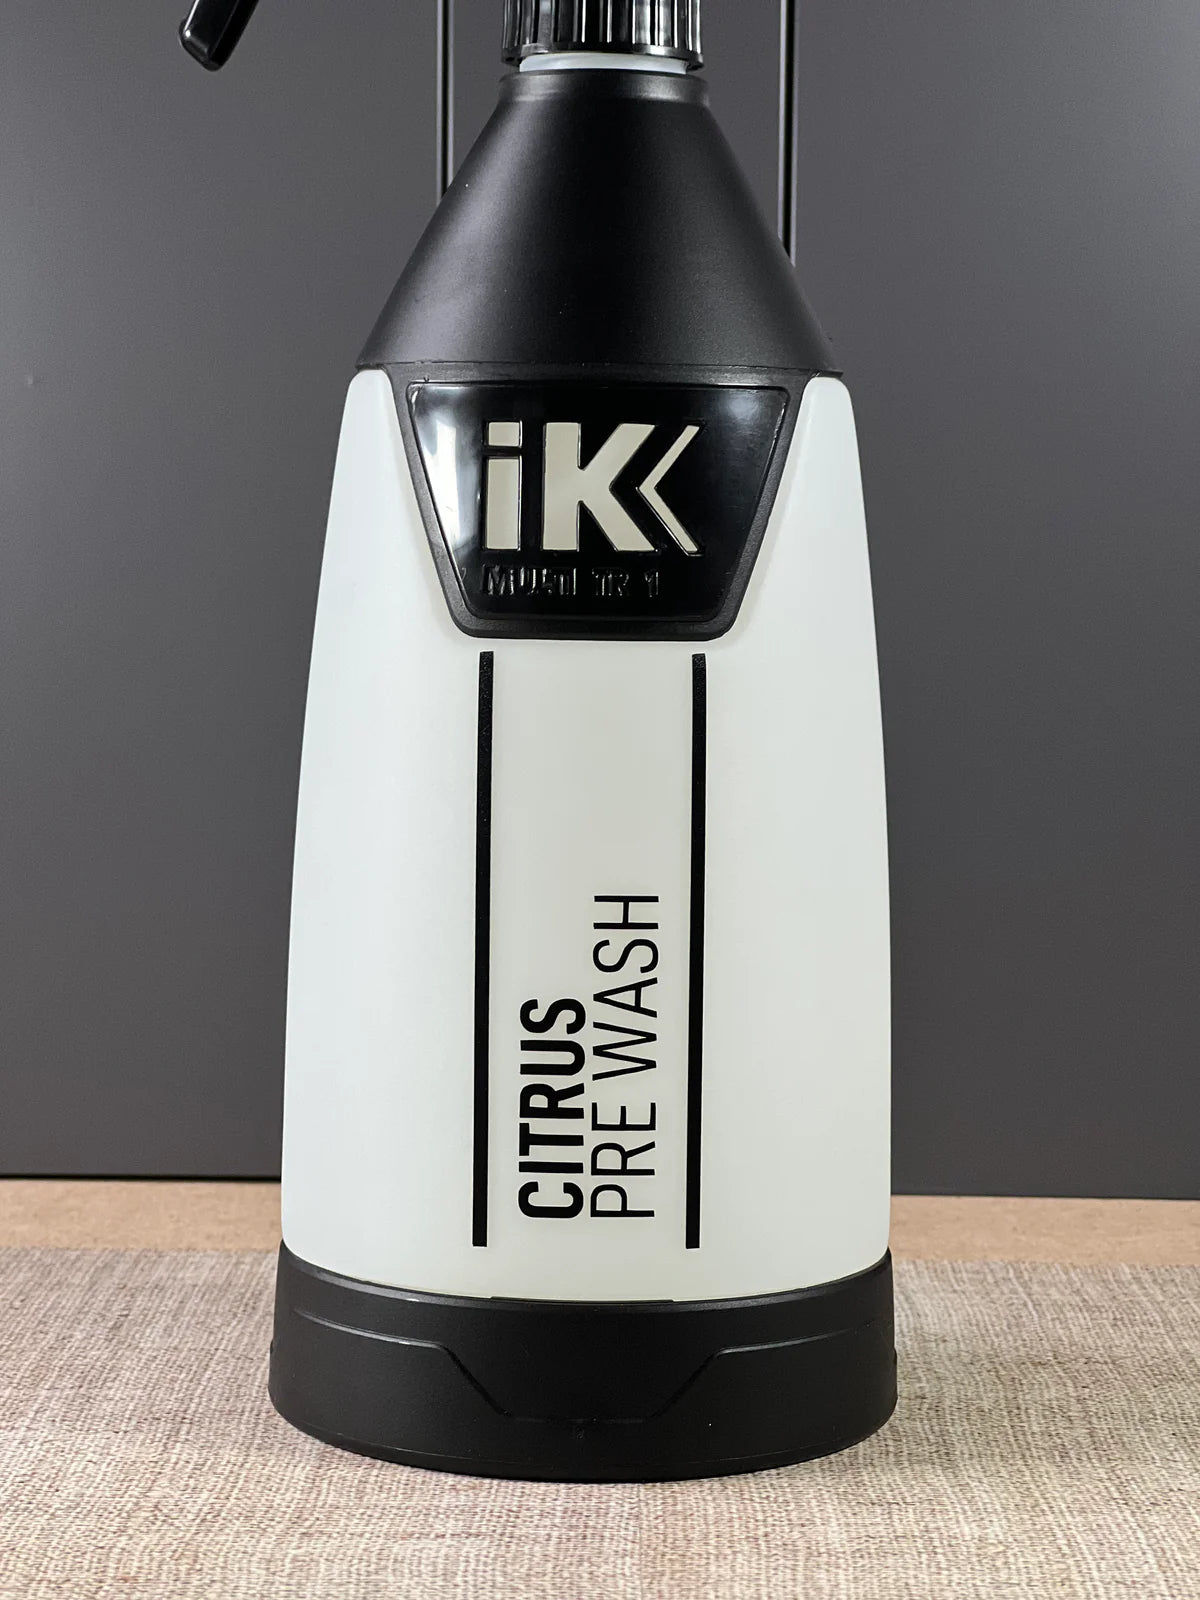 iK - Multi TR 1 Trigger Sprayers | The Rag Company